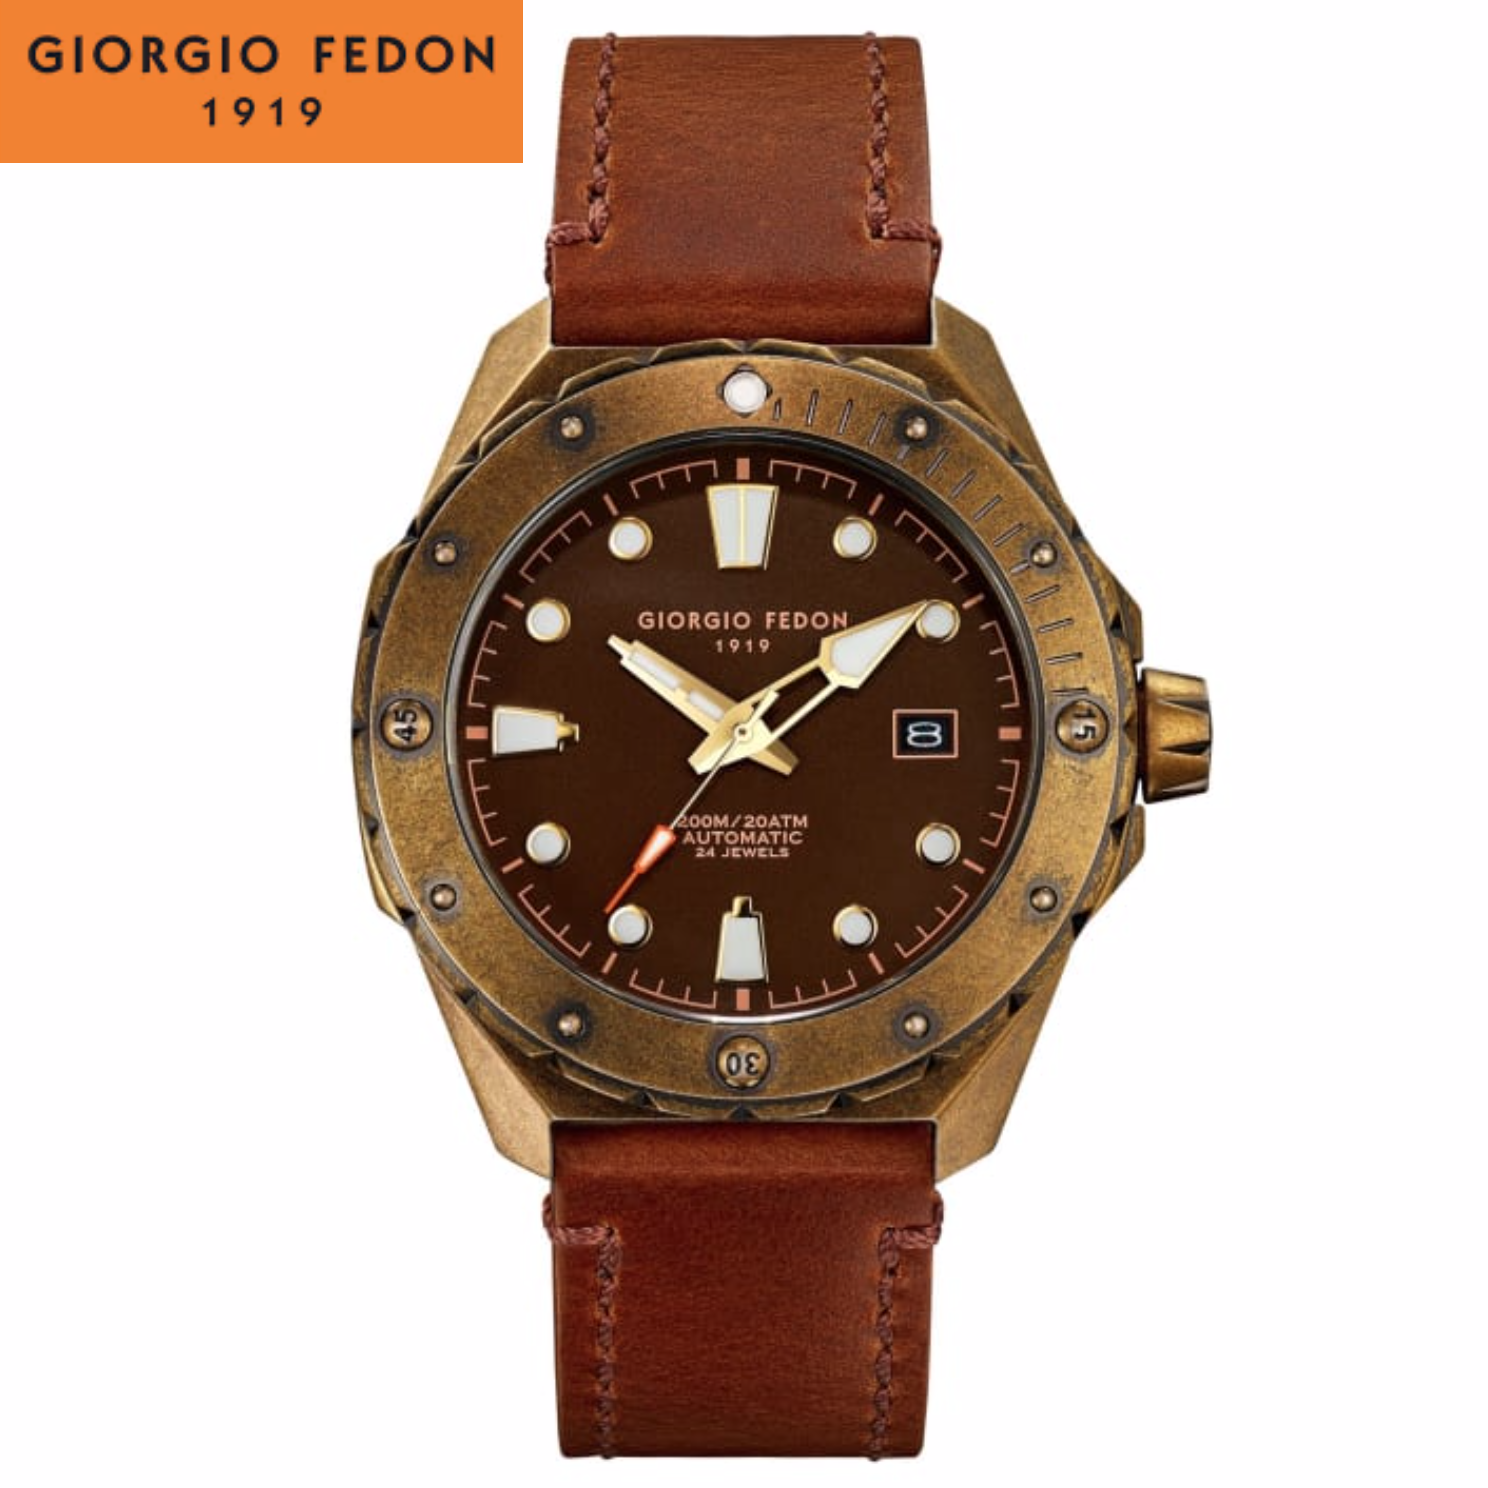 Giorgio Fedon 喬治菲登1919 Ocean Walker  海行者系列 機械腕錶 GFCJ005 古銅金/45mm